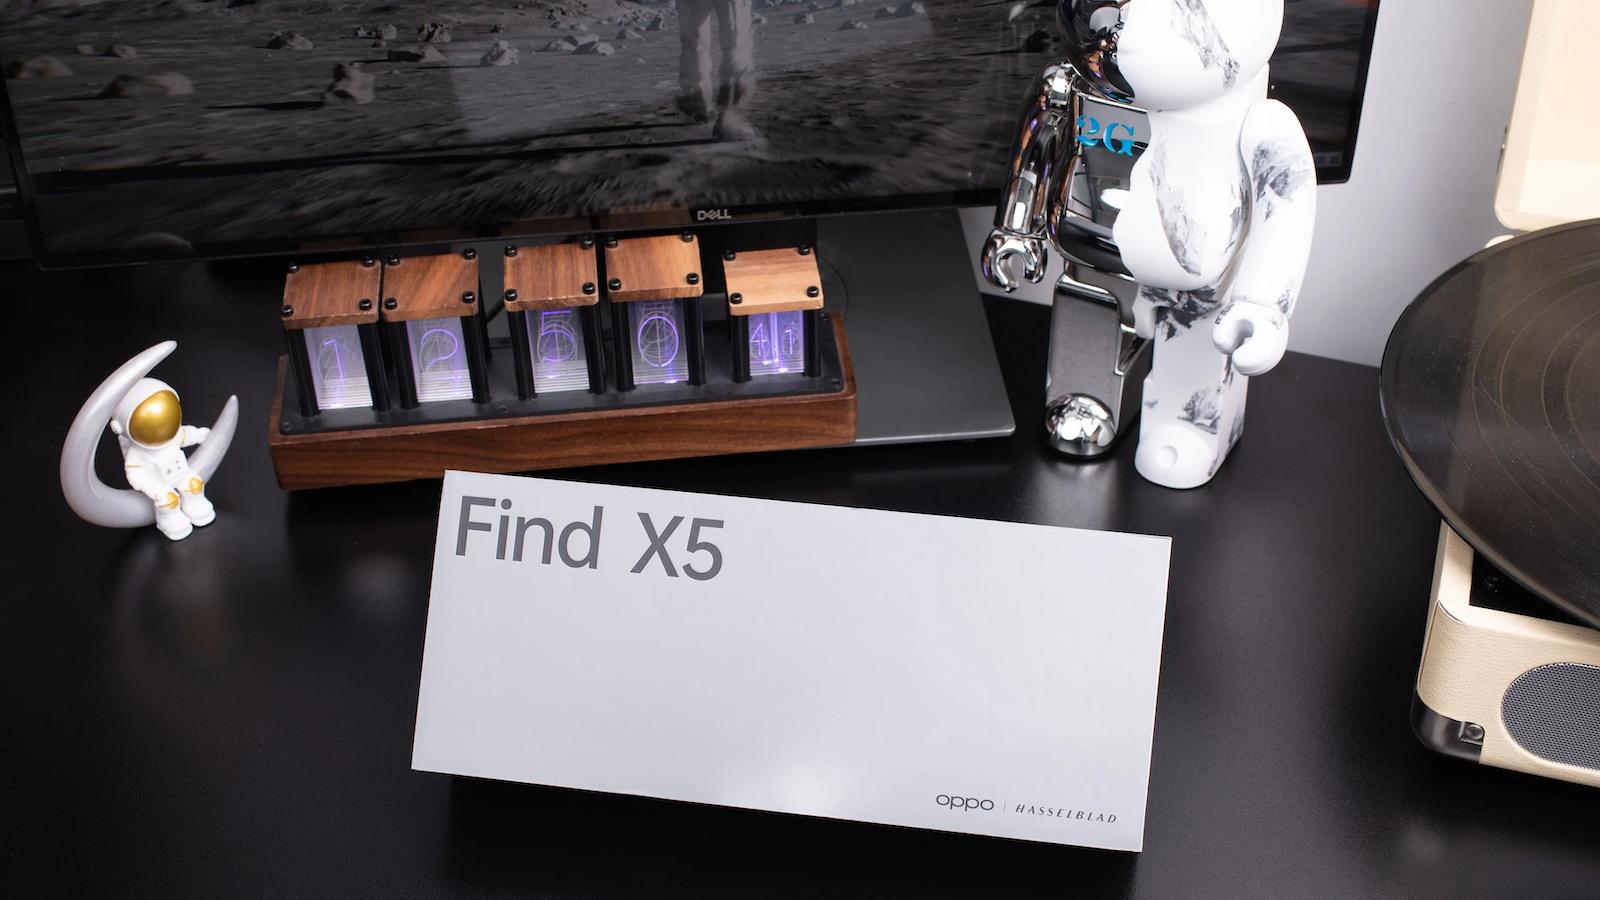 中兴|OPPO Find X5 Pro水蓝素皮谈谈体验